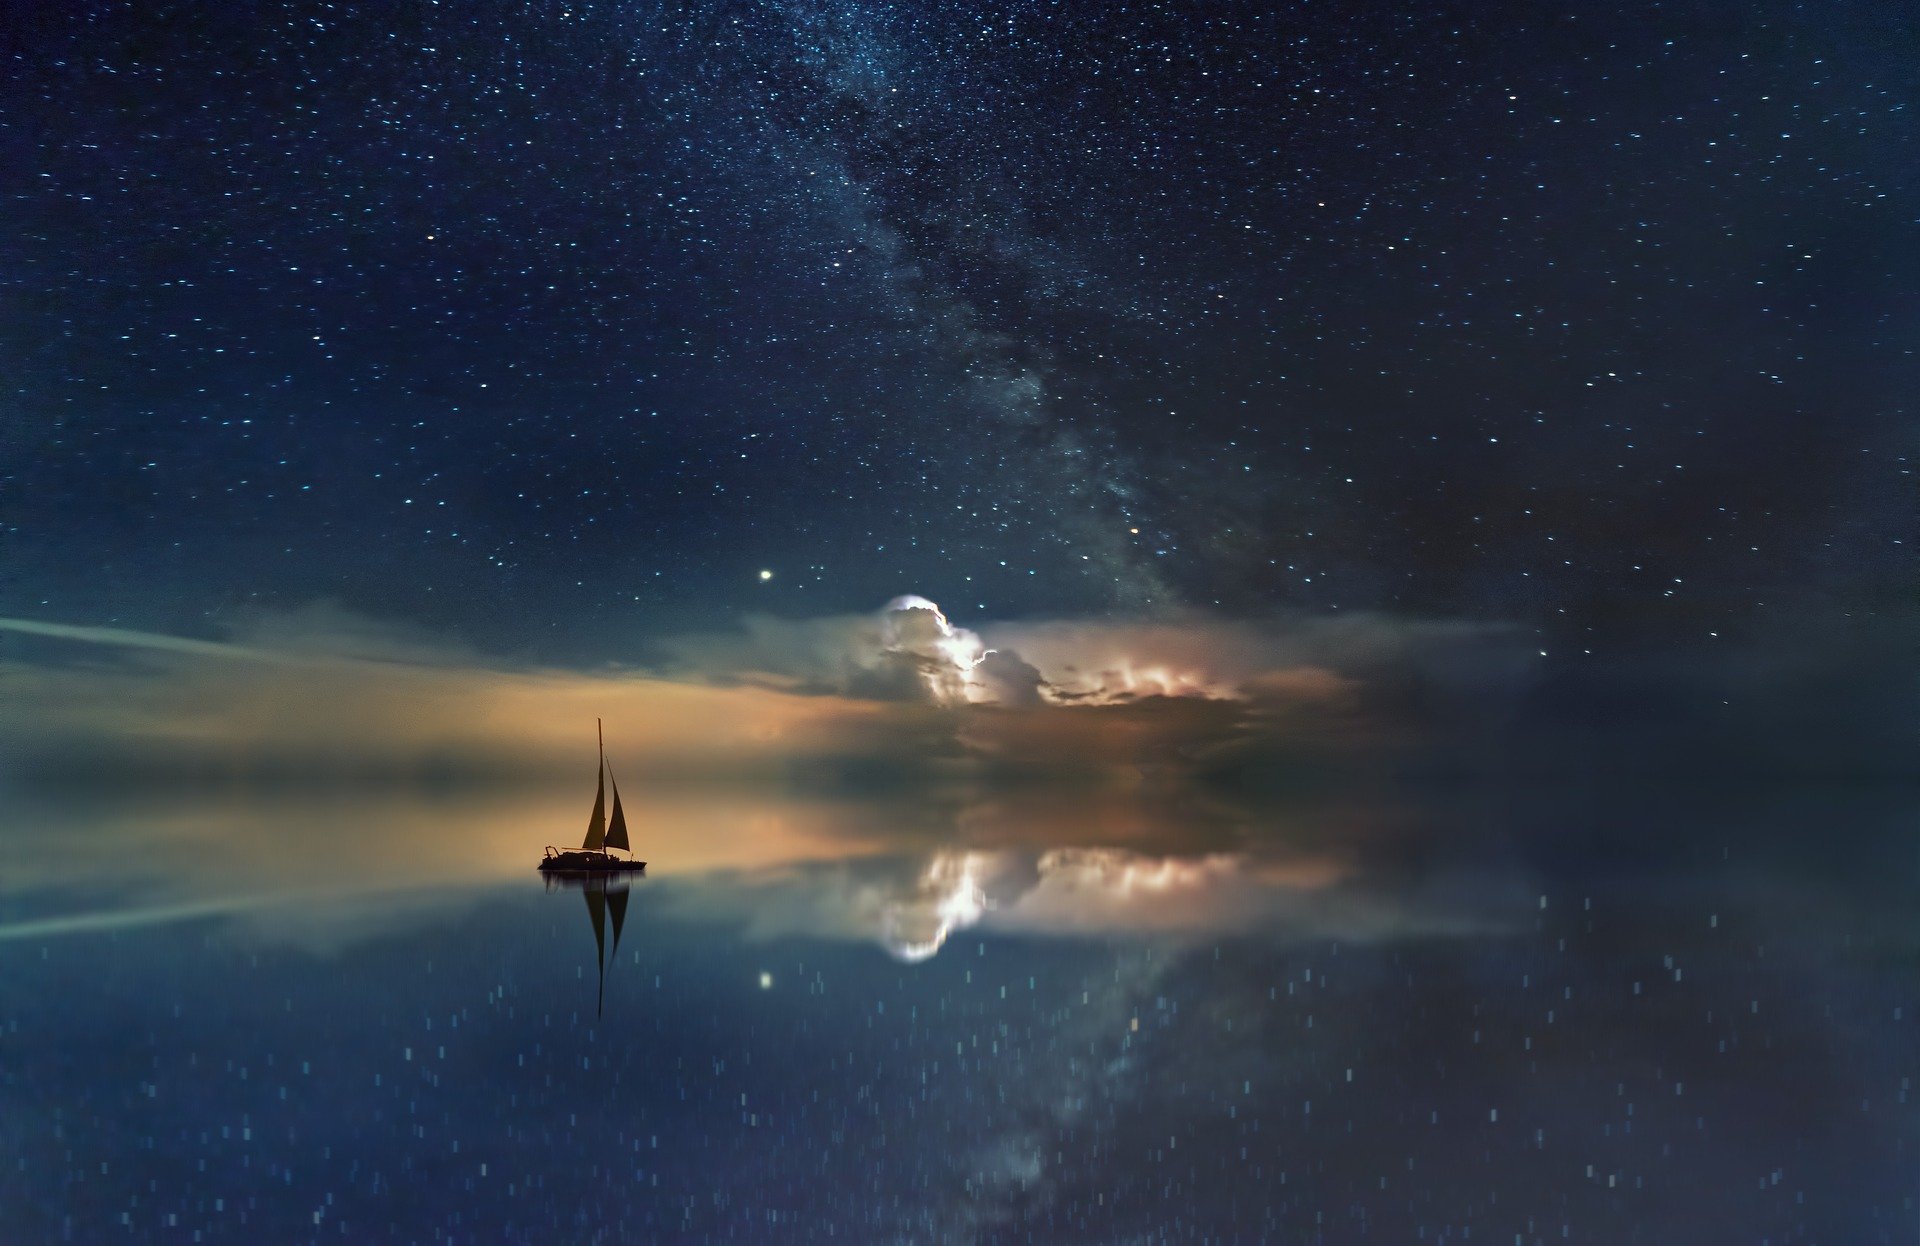 Ocean Starry Sky – Photography Print